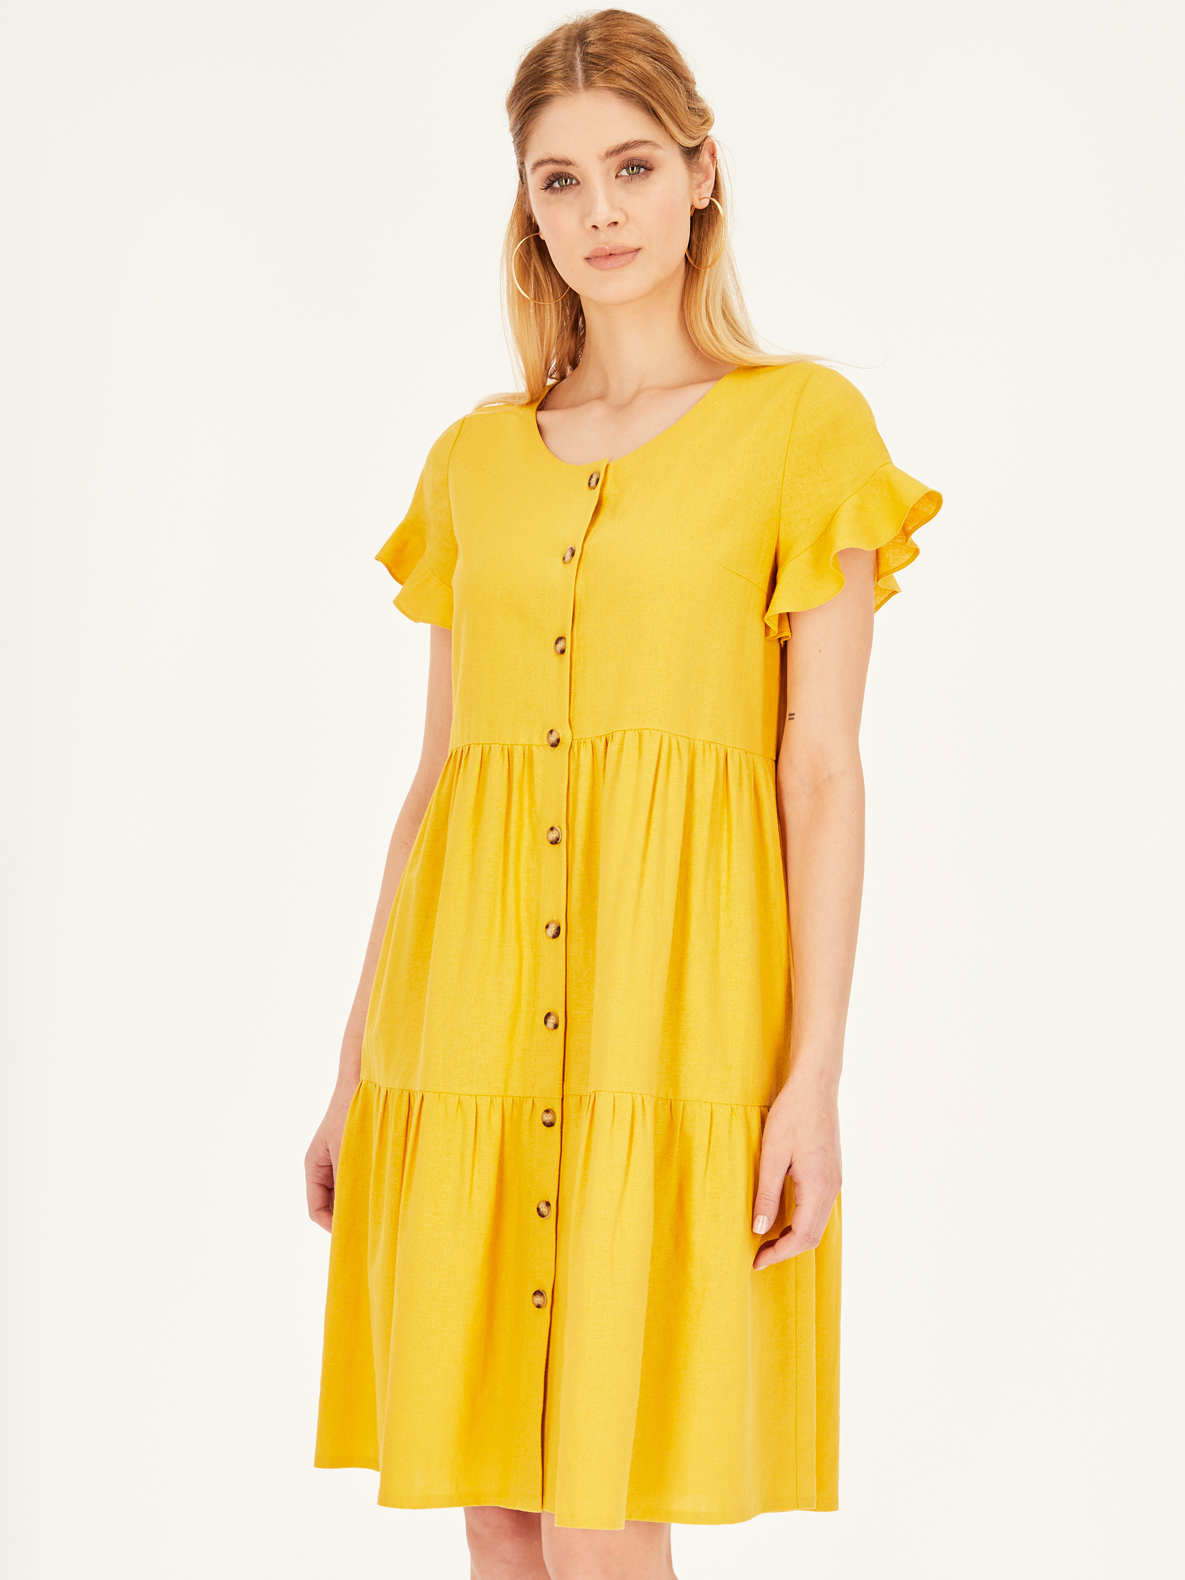 Dress Lemon yellow